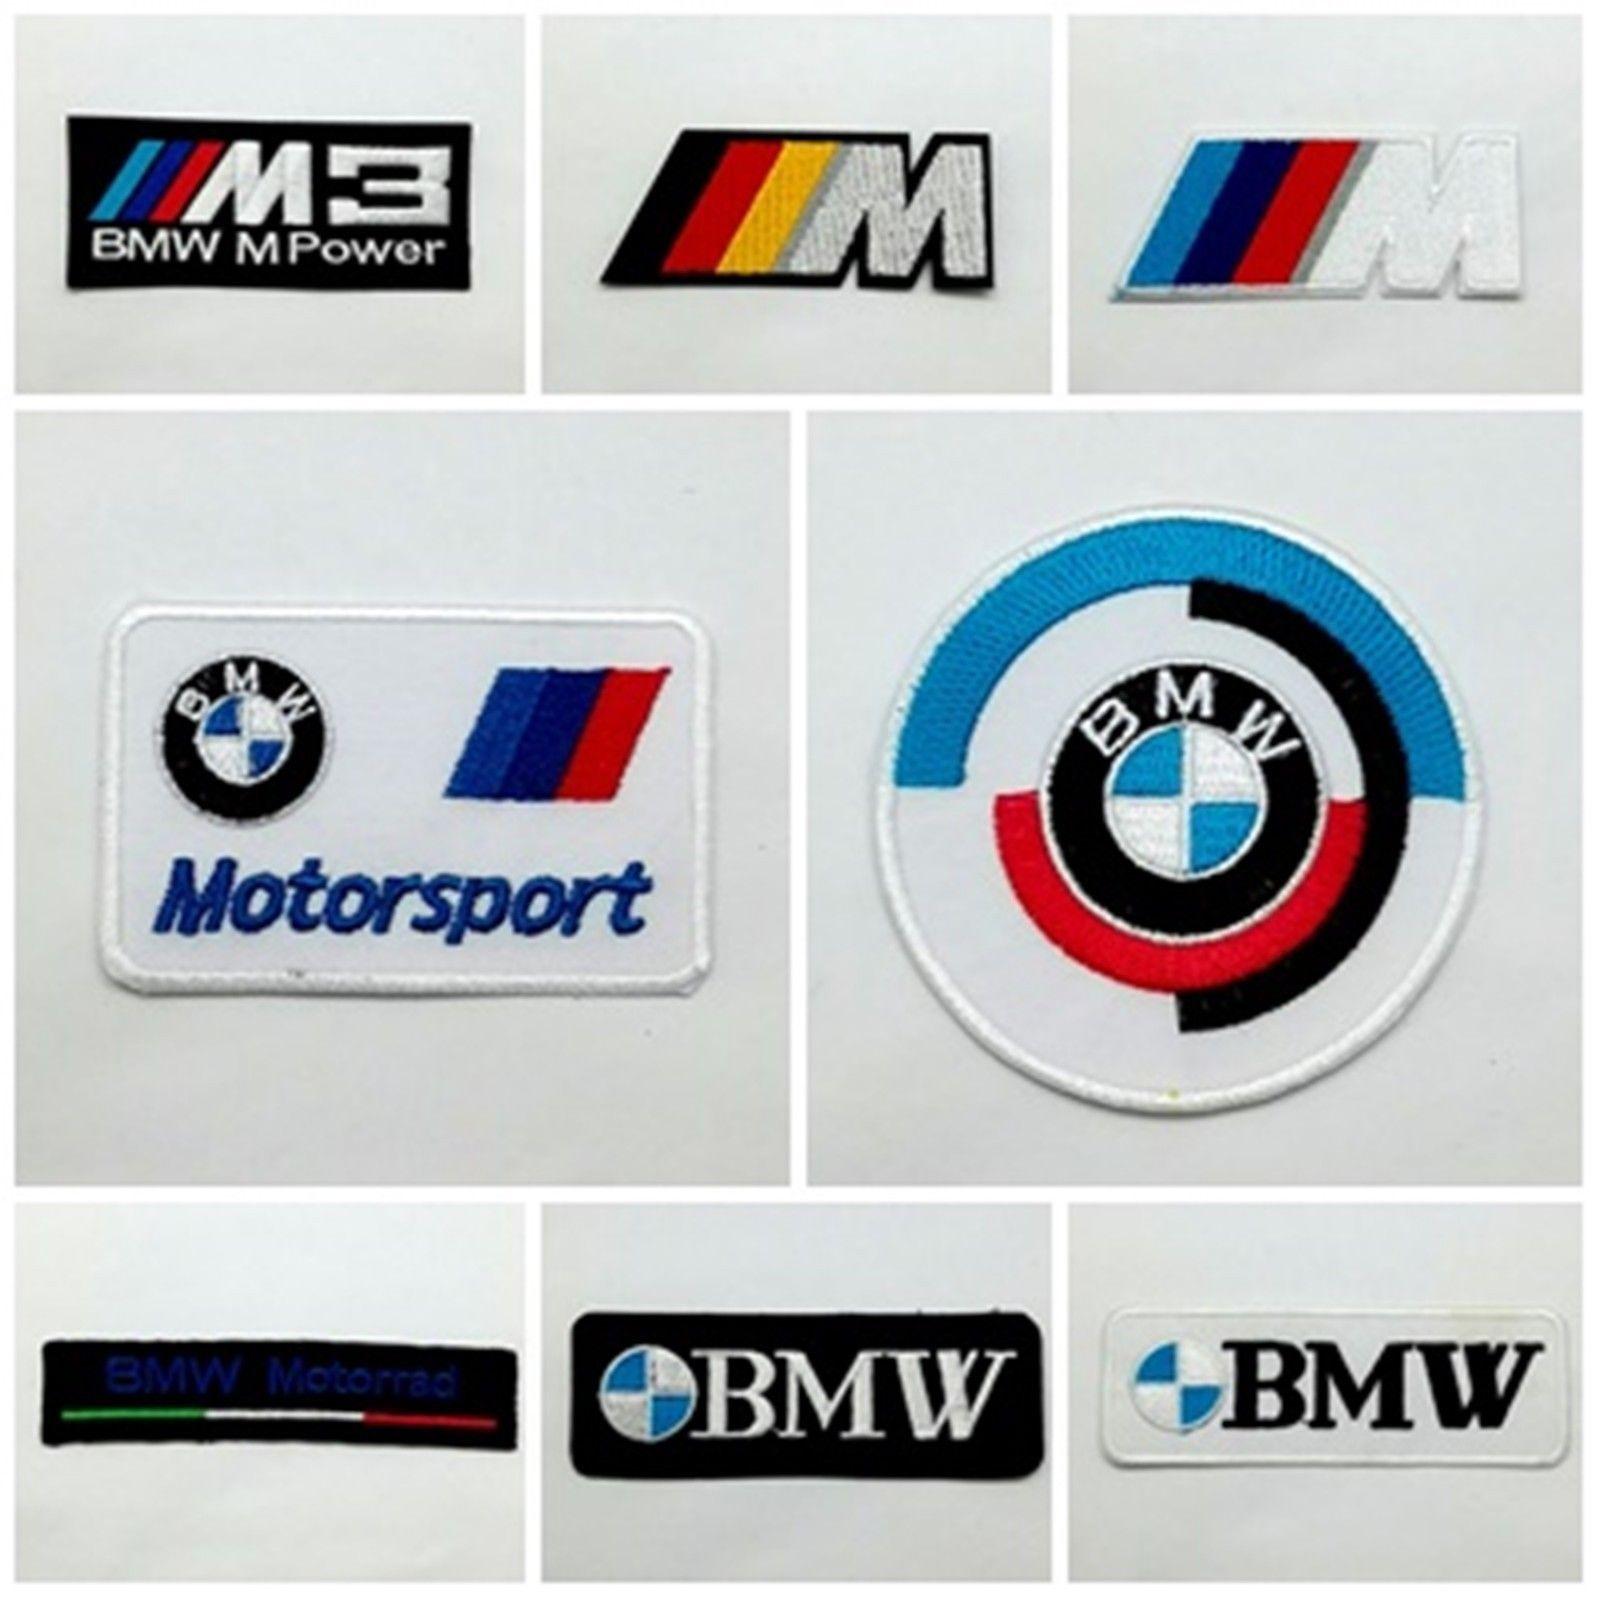 BMW M3 Power Logo - Amazing New BMW M3 M Power Motorsport Motorrad Racing Car Sew Iron On Patch Cap Logo DIY 2018 2019